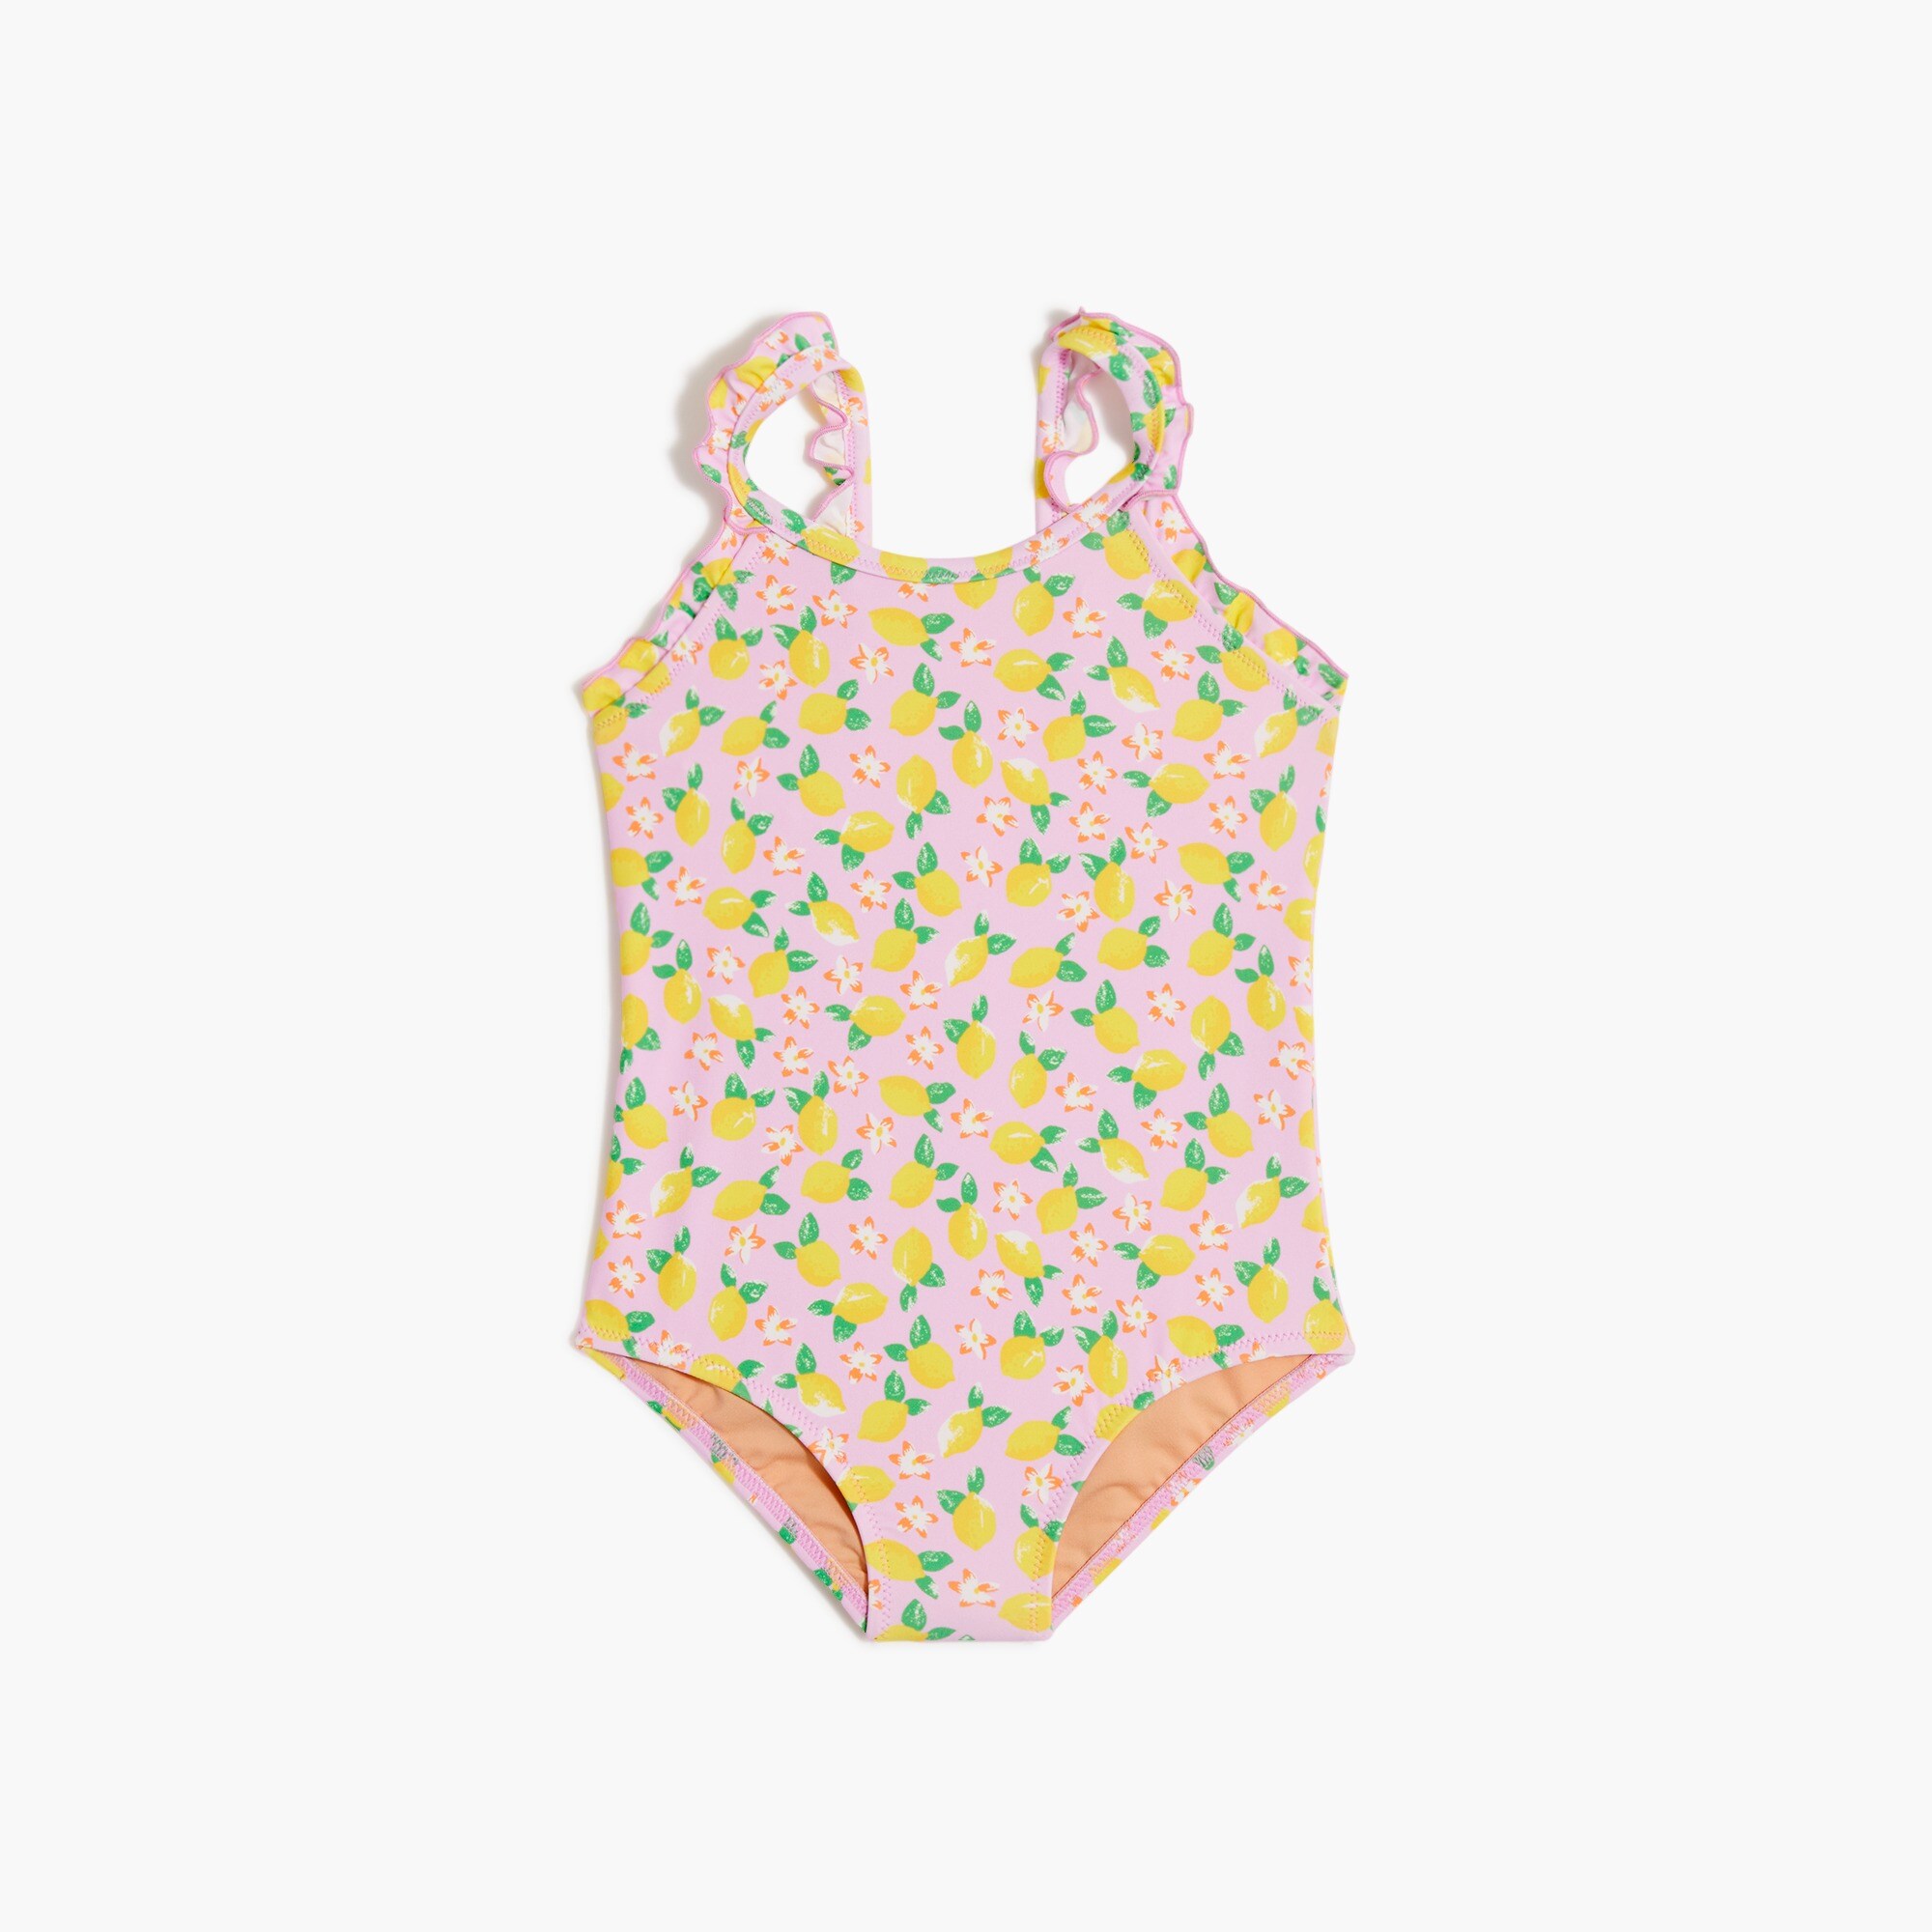  Girls' lemon ruffle one-piece swimsuit